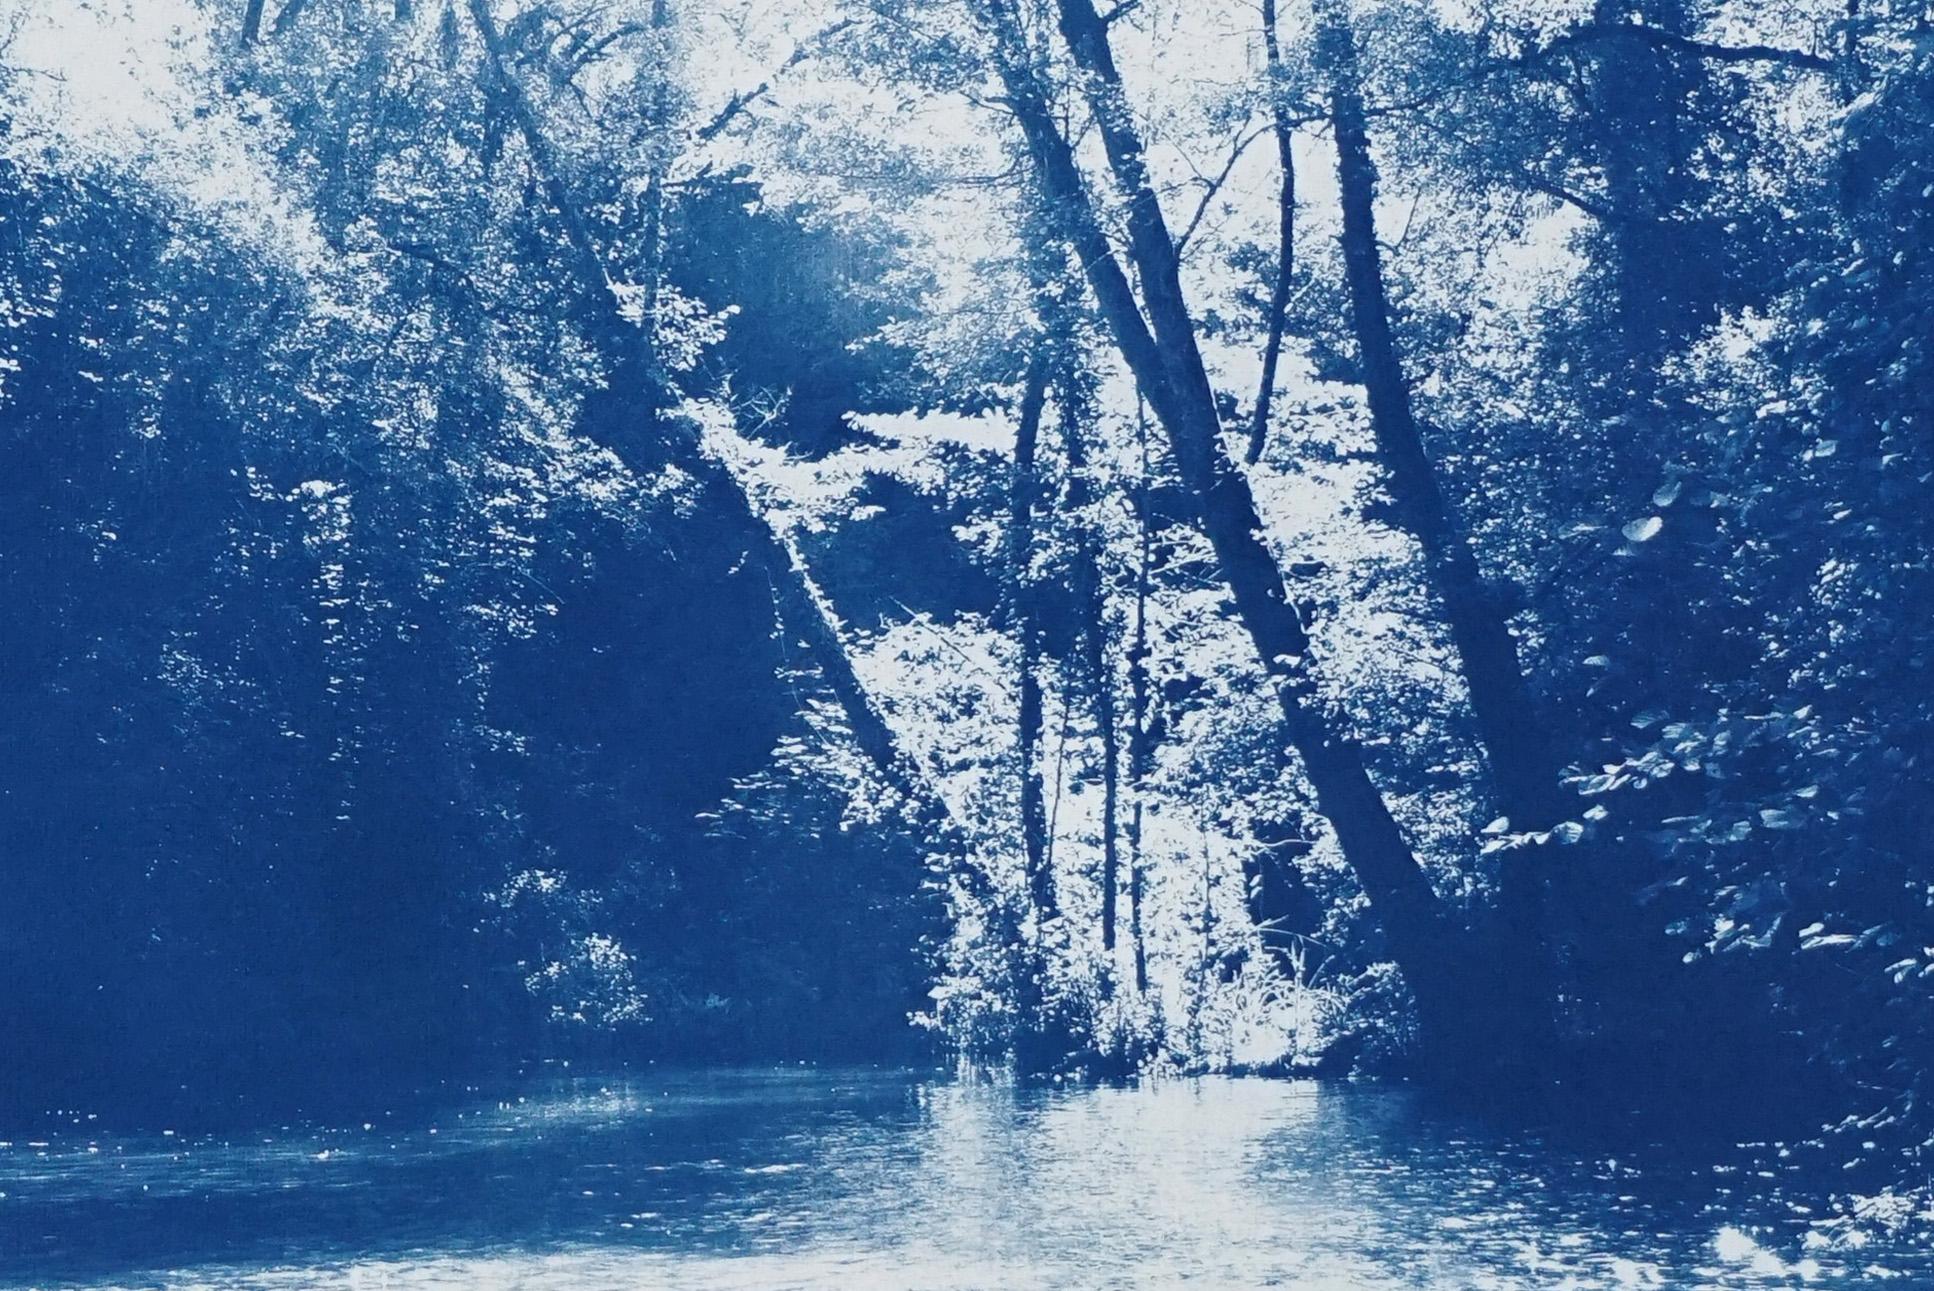 Romantic Landscape of Scandinavian Enchanted Forest, Large Lake Print Cyanotype For Sale 2